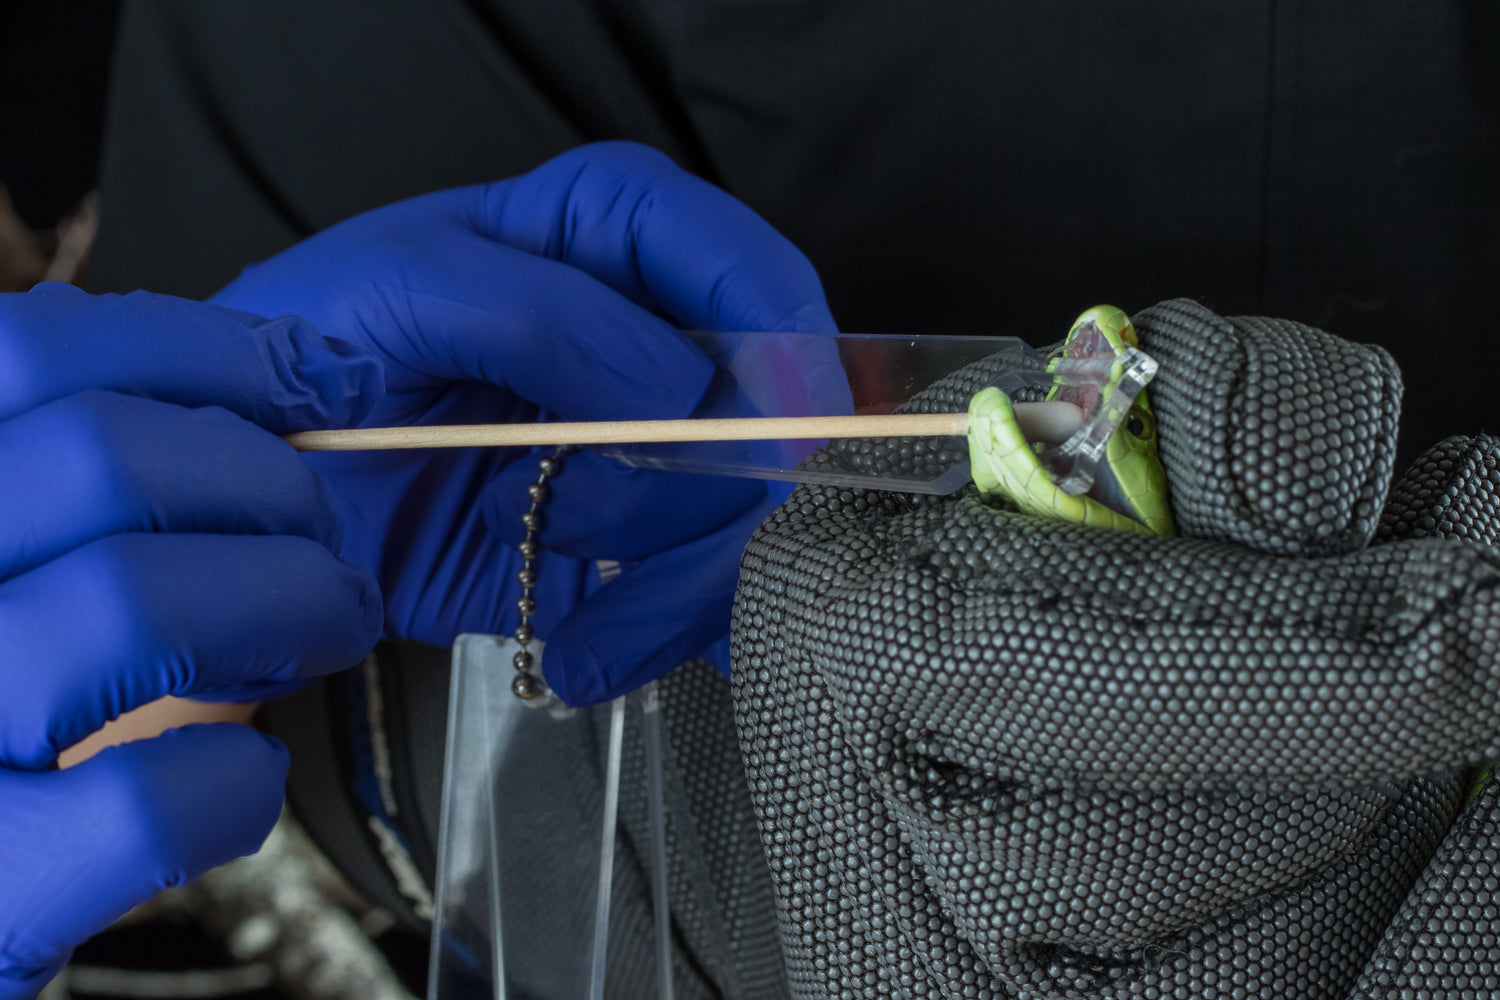 Video: Fishhead team collecting sample at NARBC, photo: Fishhead team swabbing green mamba